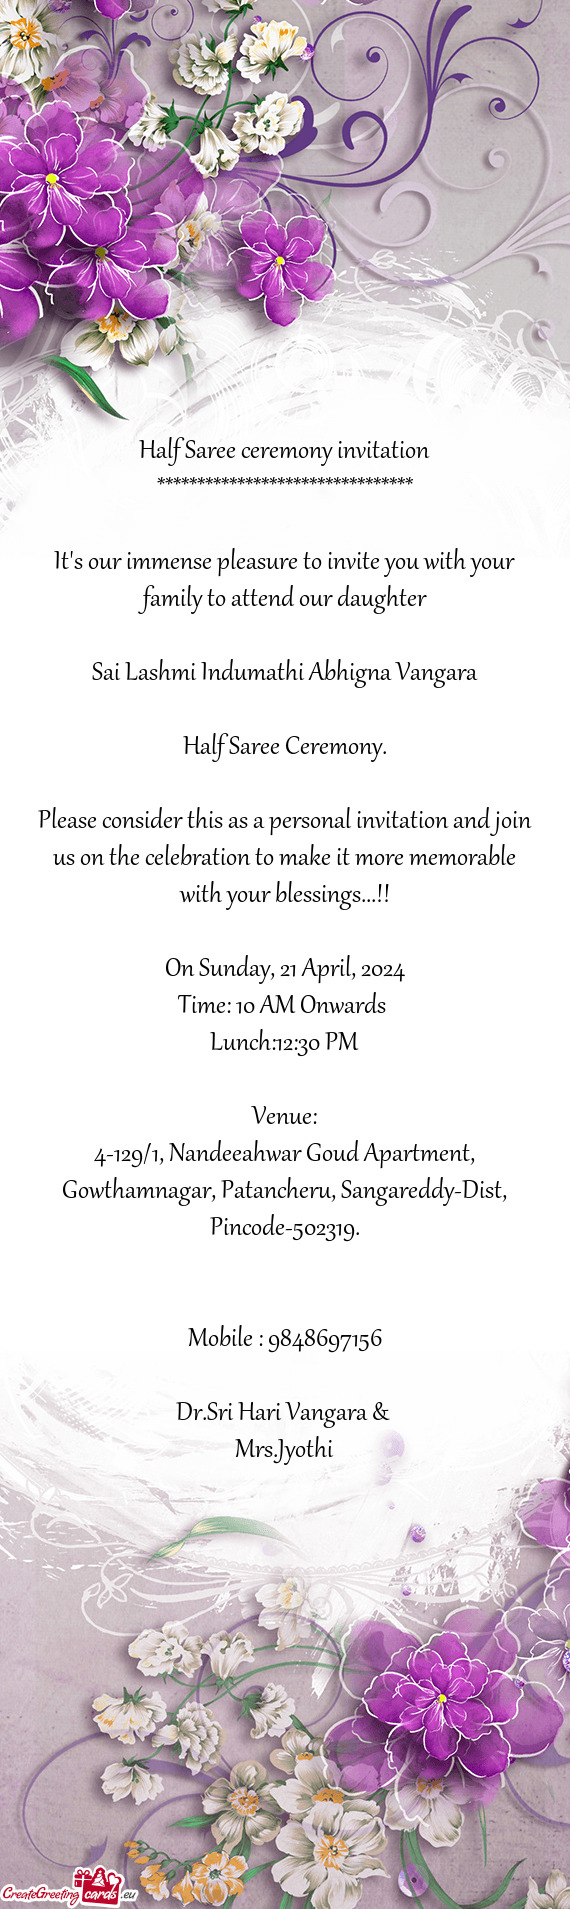 4-129/1, Nandeeahwar Goud Apartment, Gowthamnagar, Patancheru, Sangareddy-Dist, Pincode-502319